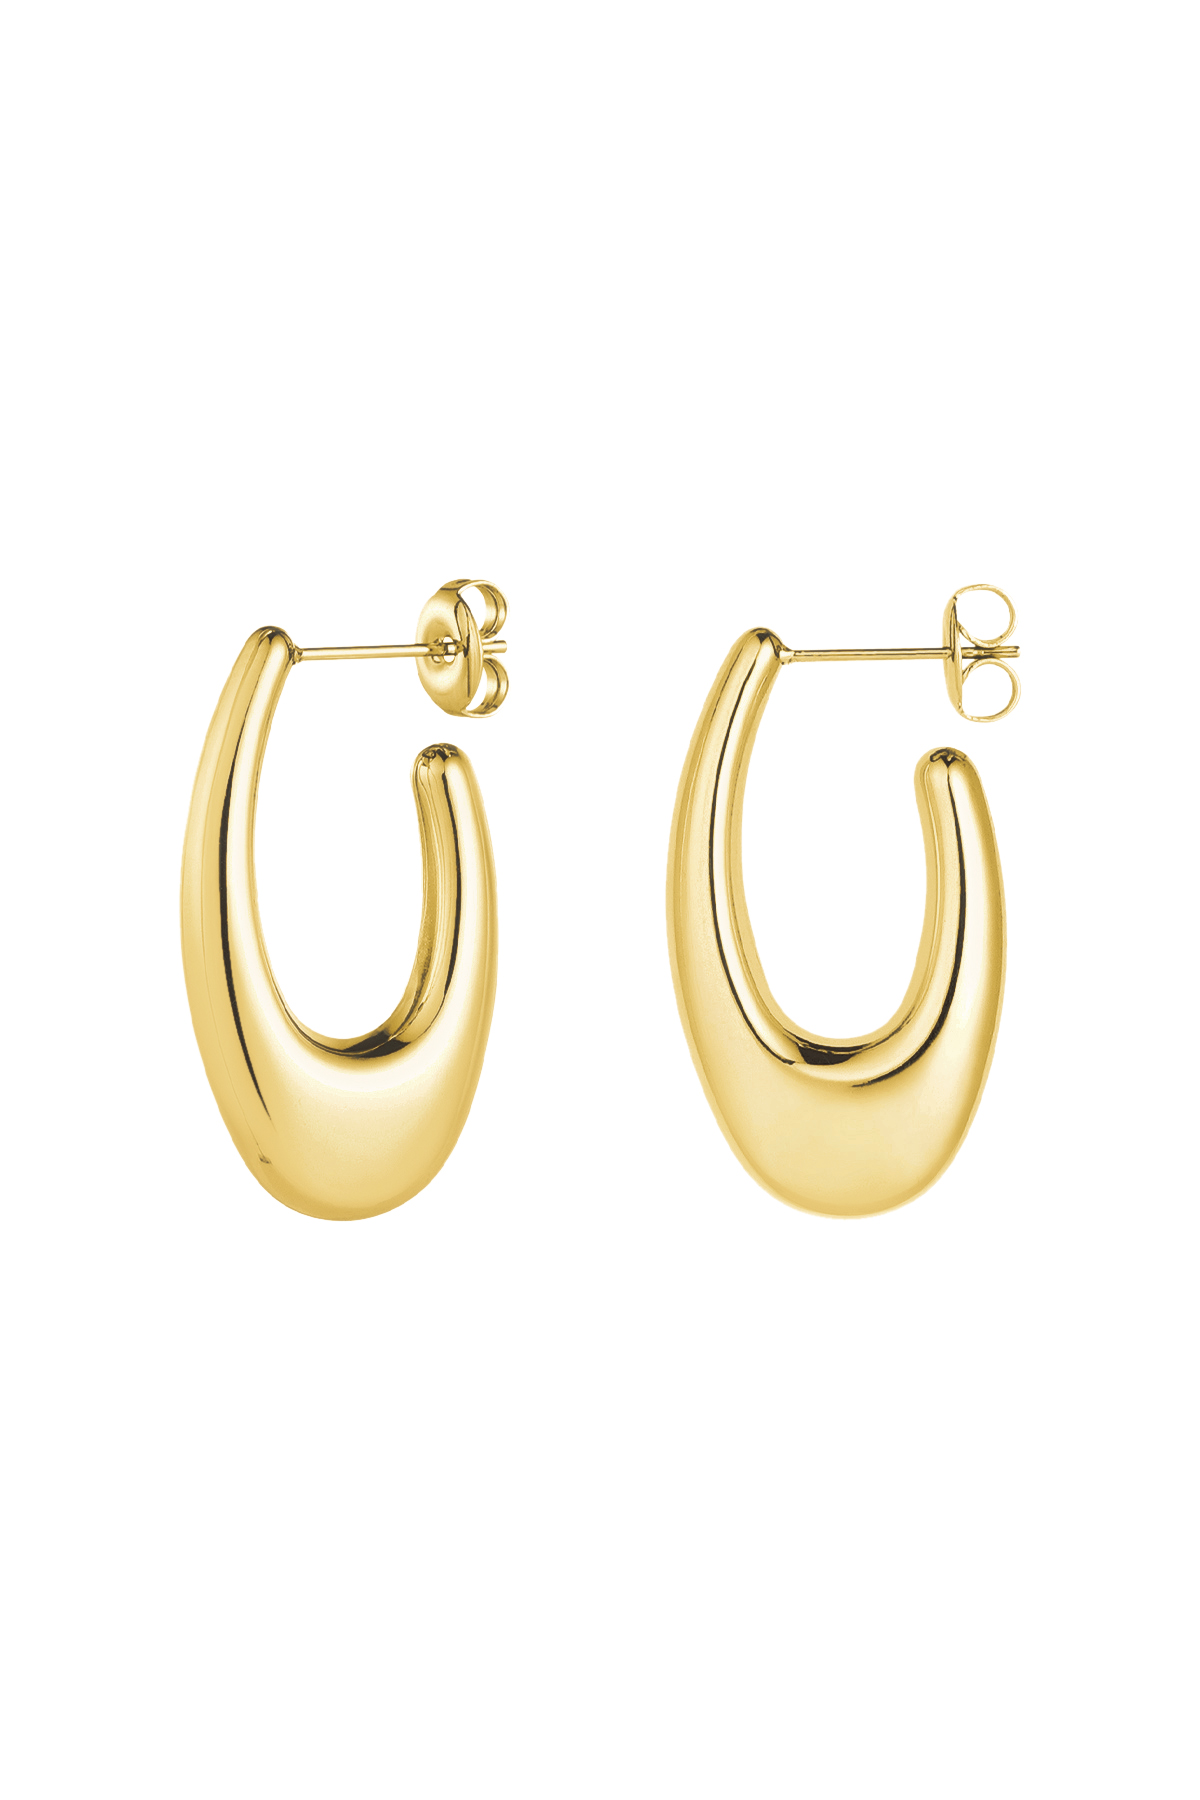 Earrings aesthetic - gold